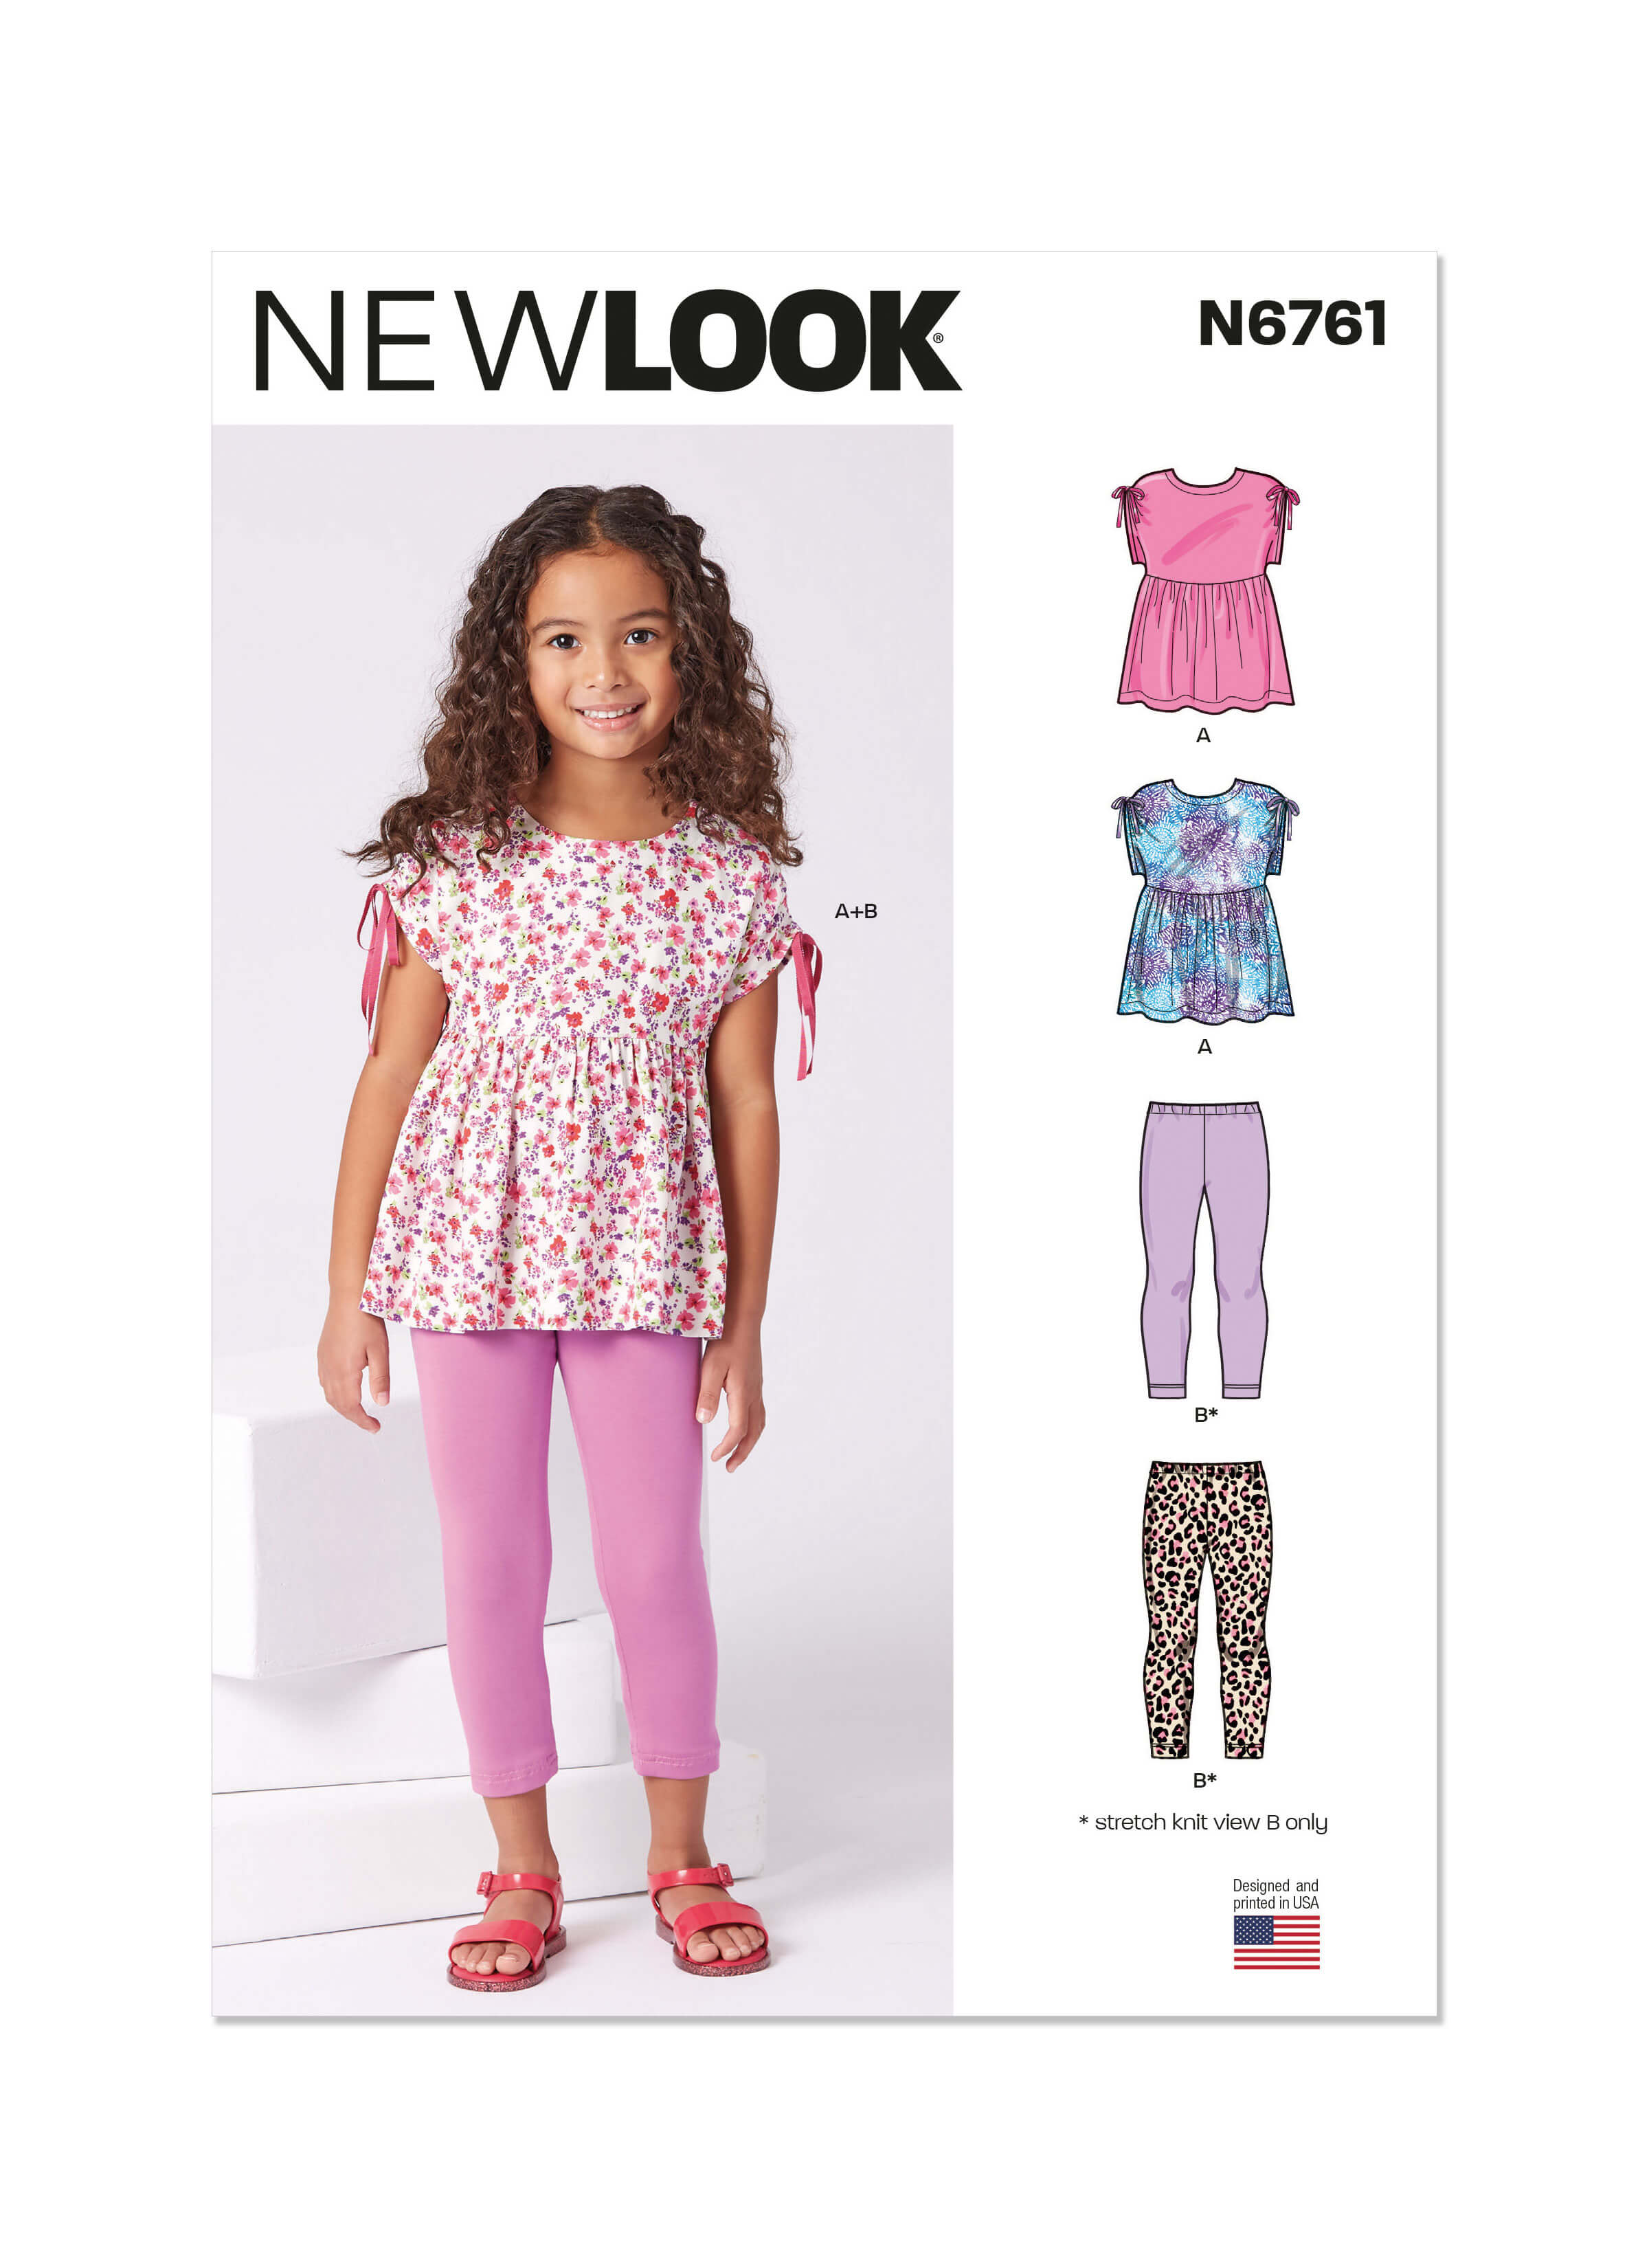 New Look Sewing Pattern N6761 Children's Top and Leggings